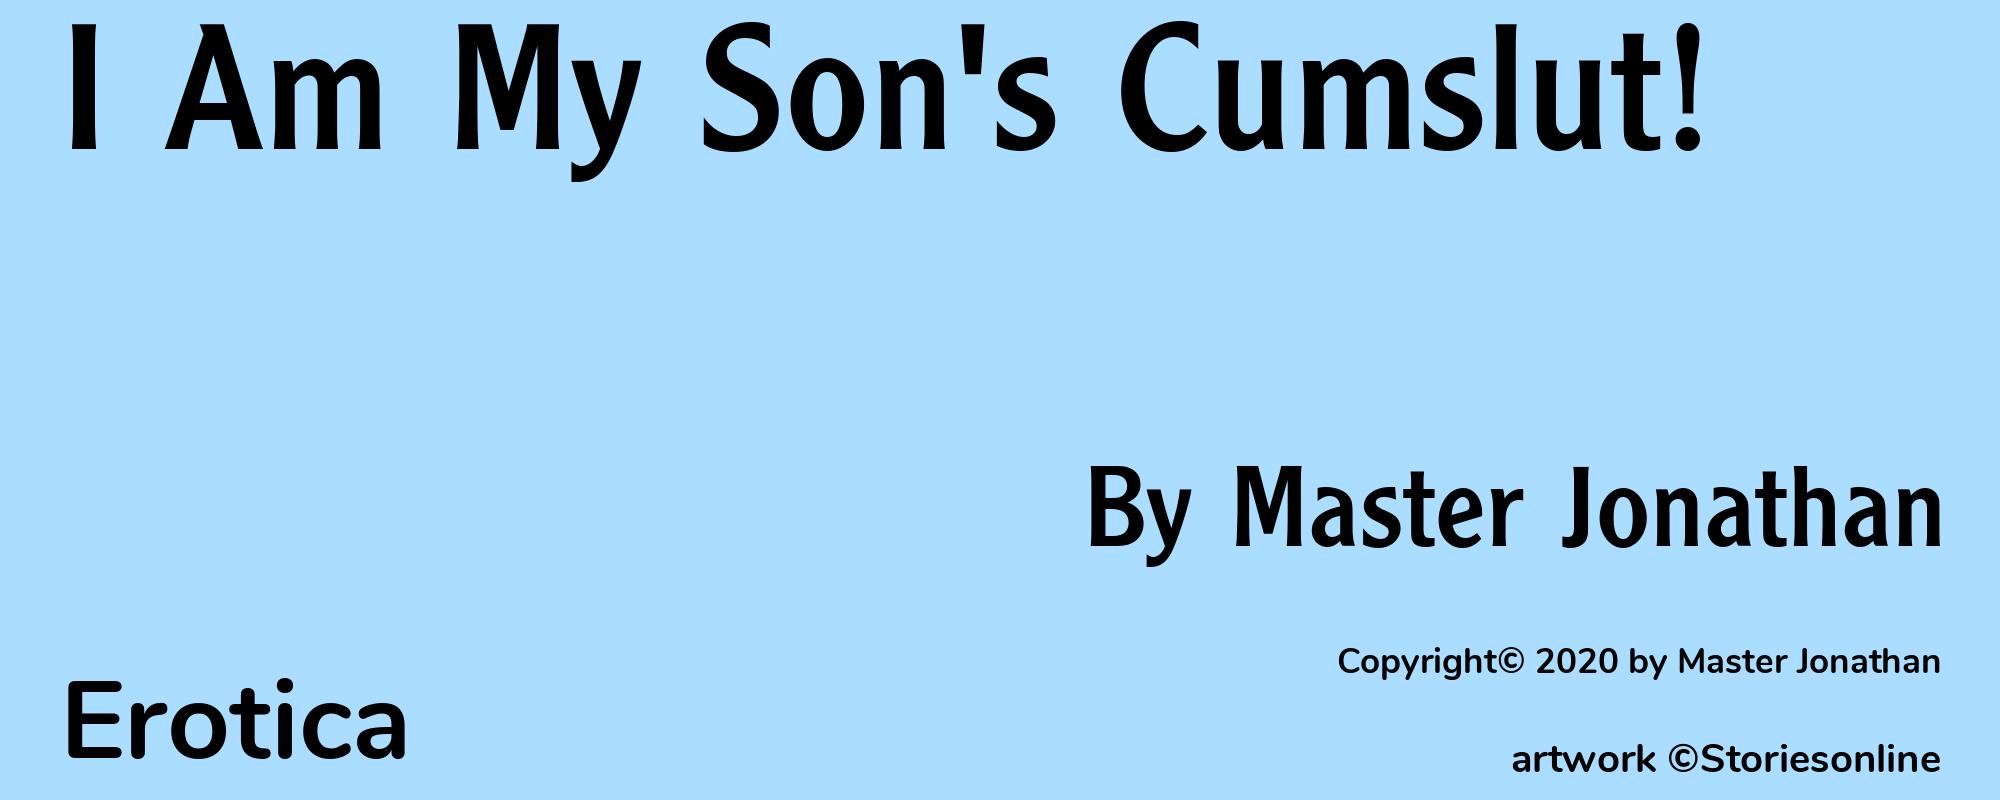 I Am My Son's Cumslut! - Cover